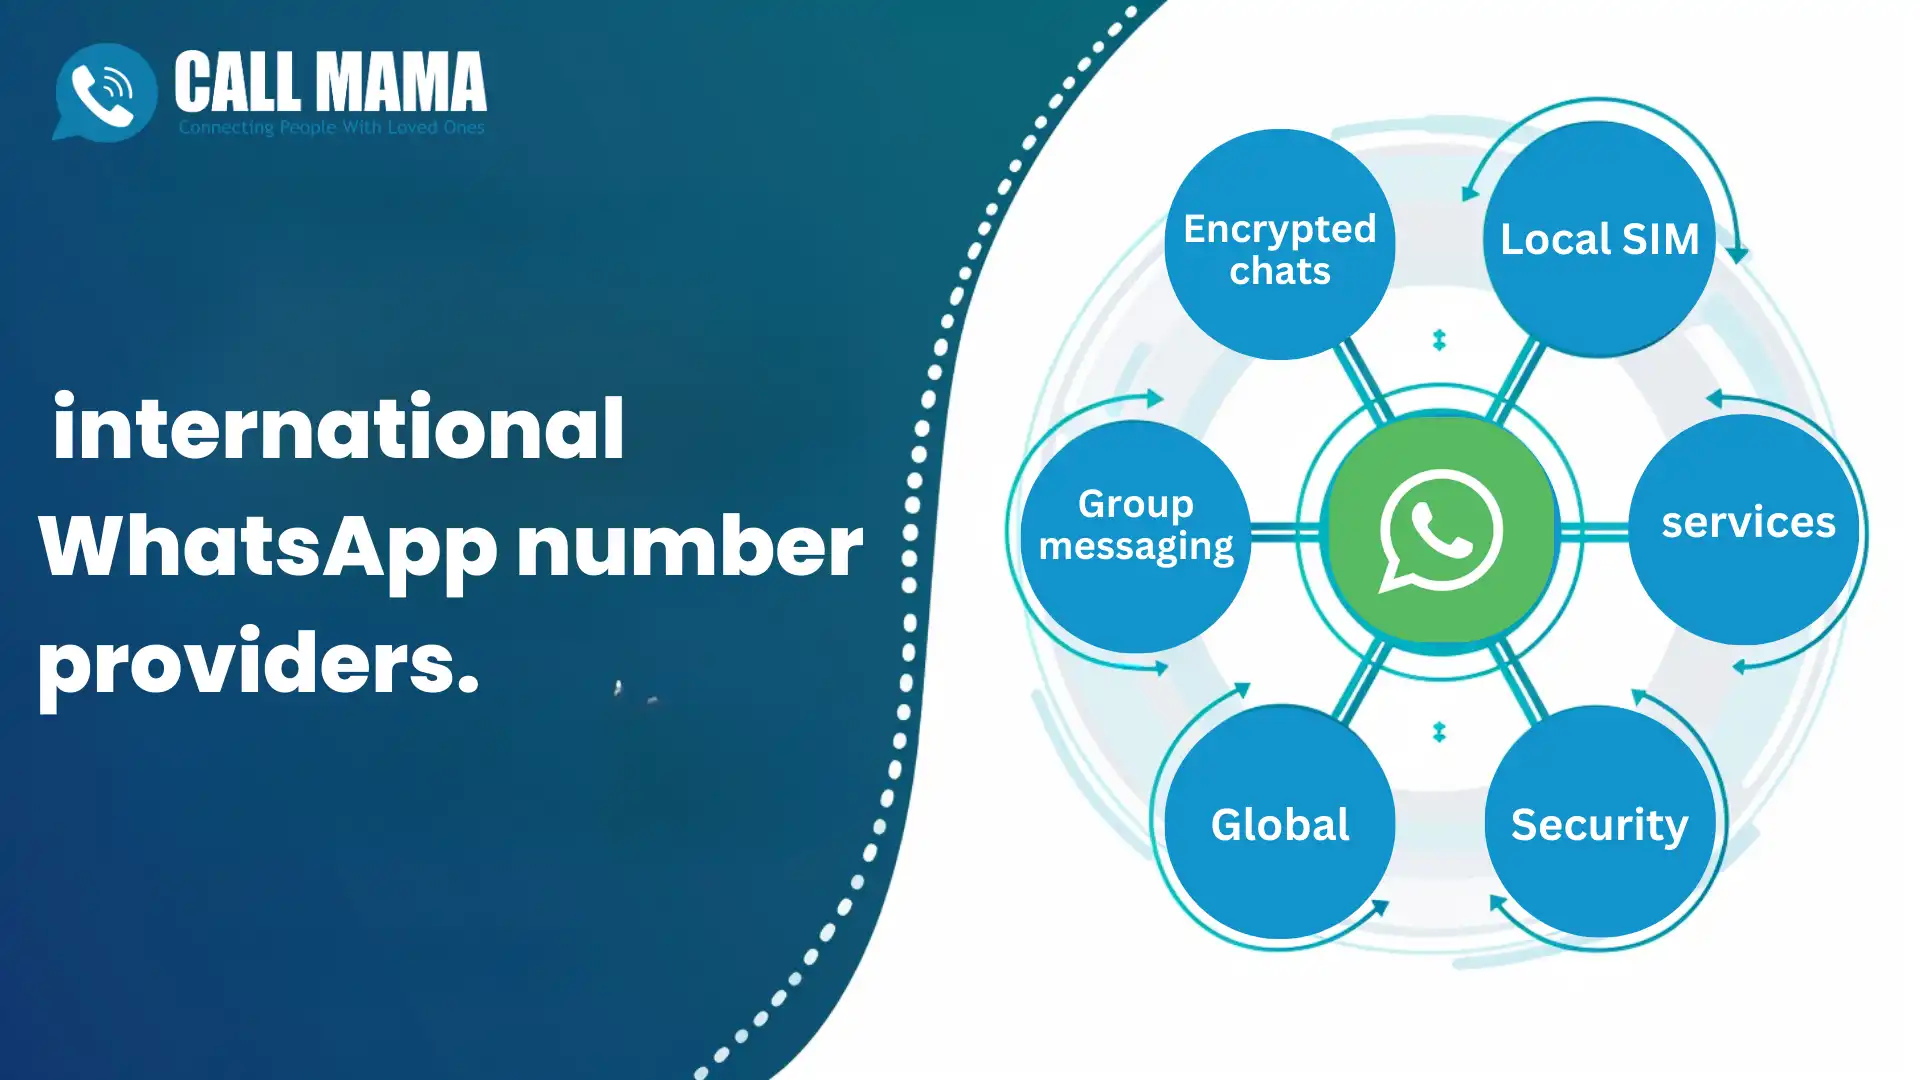 reputable international WhatsApp number providers.